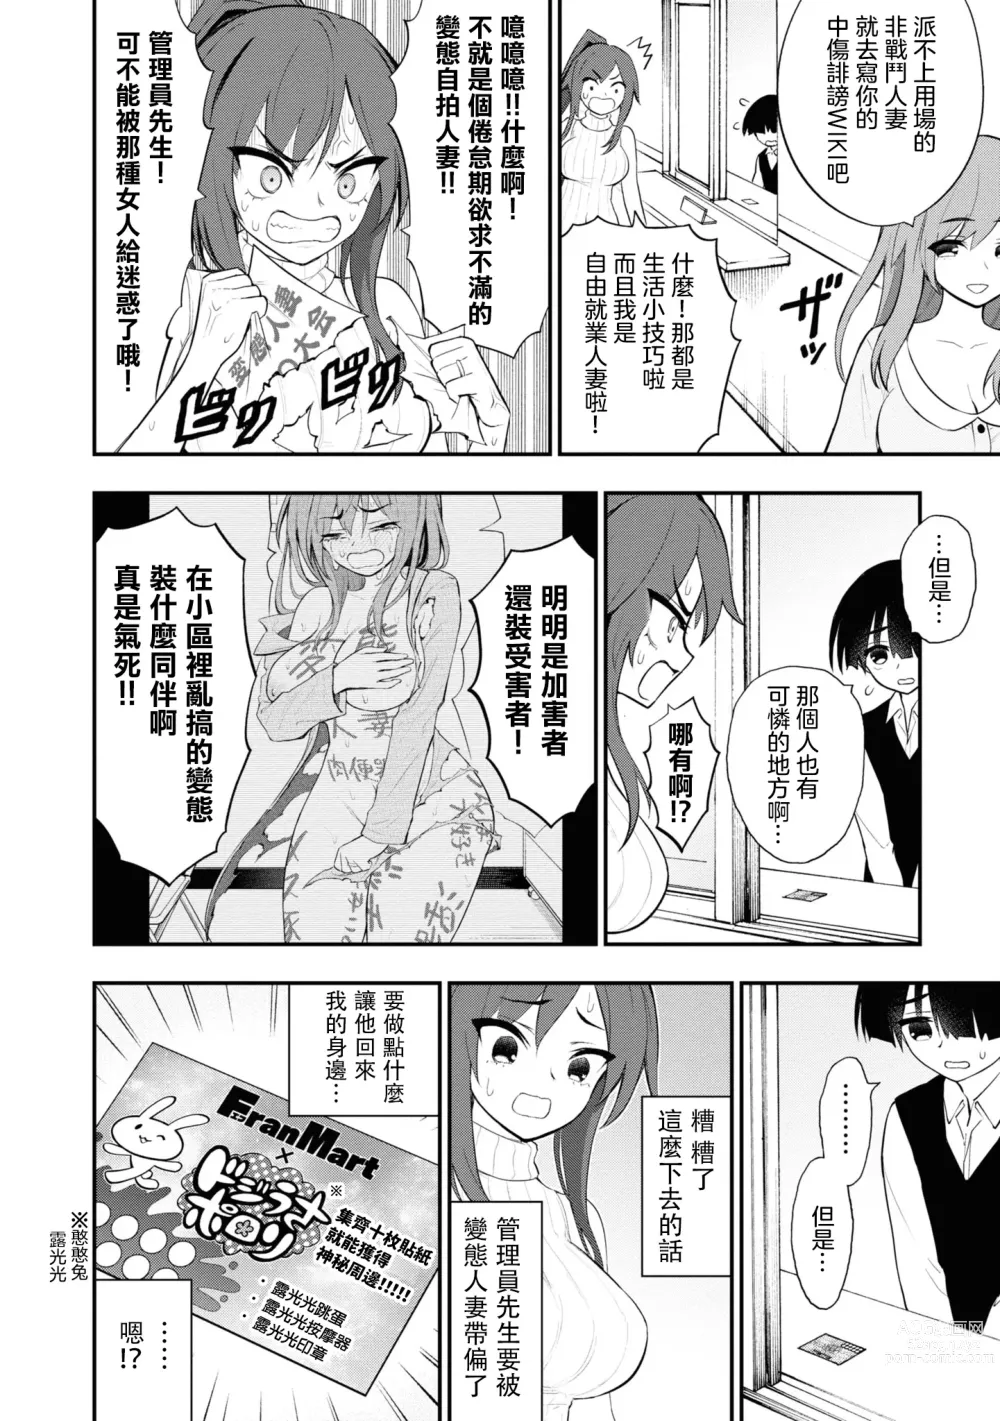 Page 9 of manga 淫獄小區 ch15-16